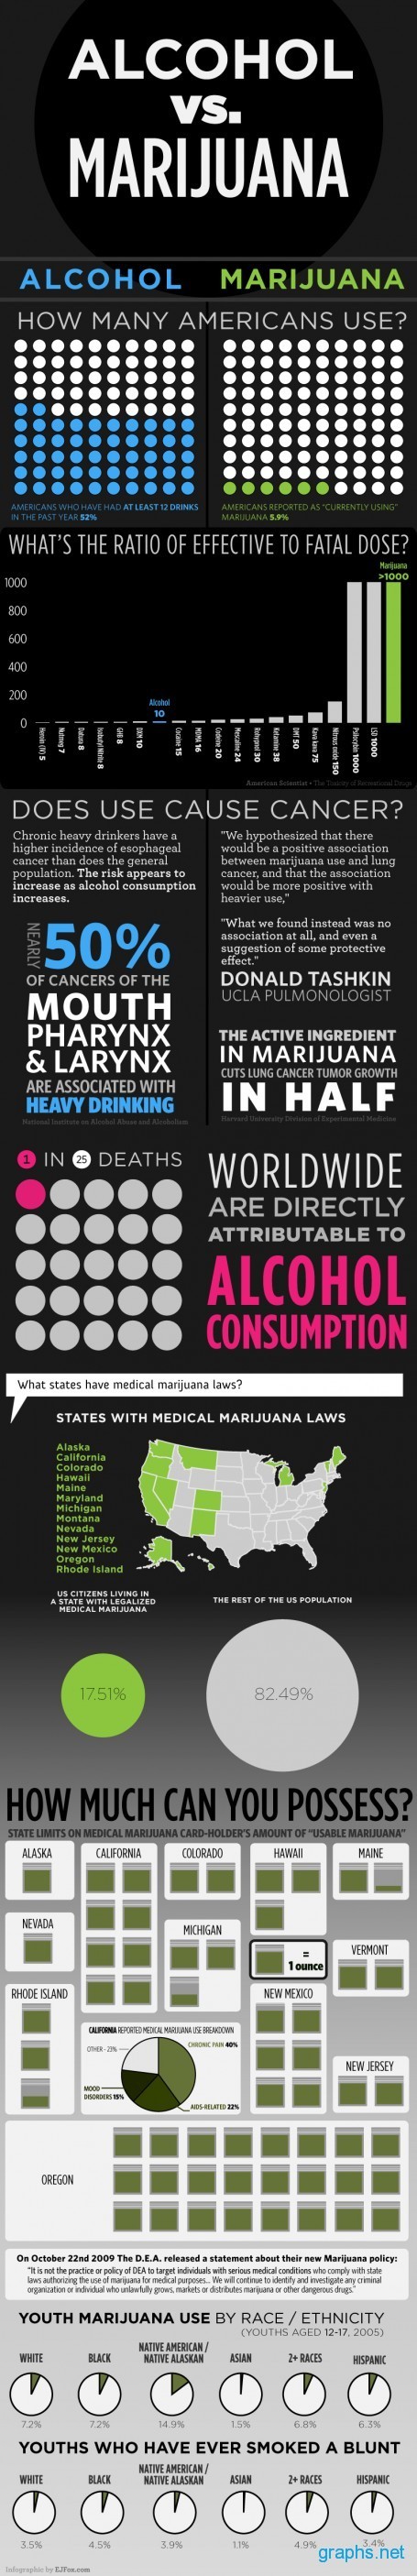 Alcohol and Marijuana Comparison